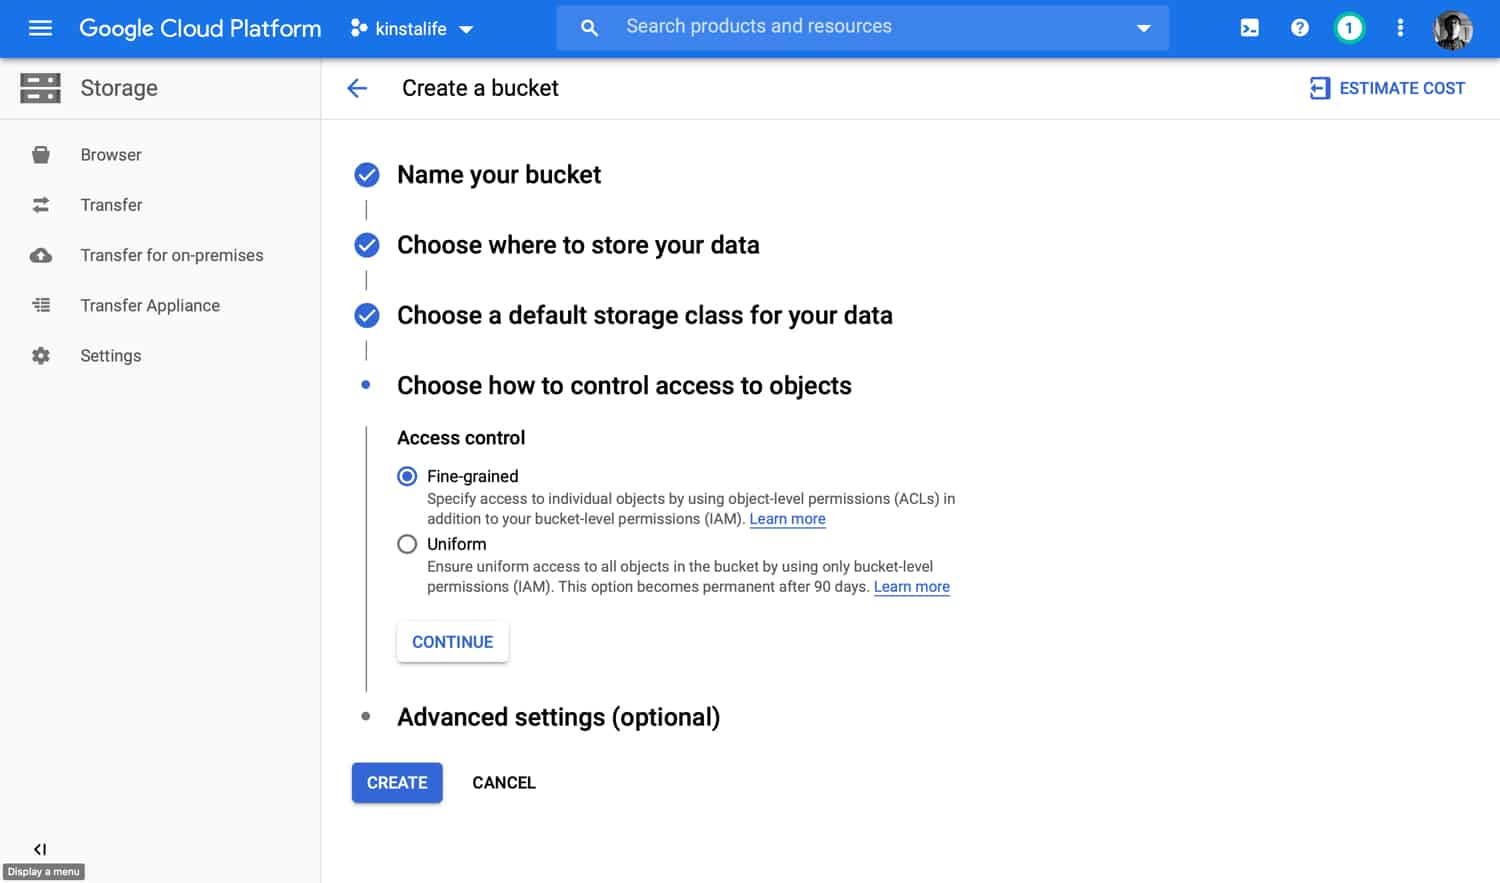 Schermata Create a bucket in Google Cloud Platform: è evidenziata la sezione "Choose a default storage class for your data".